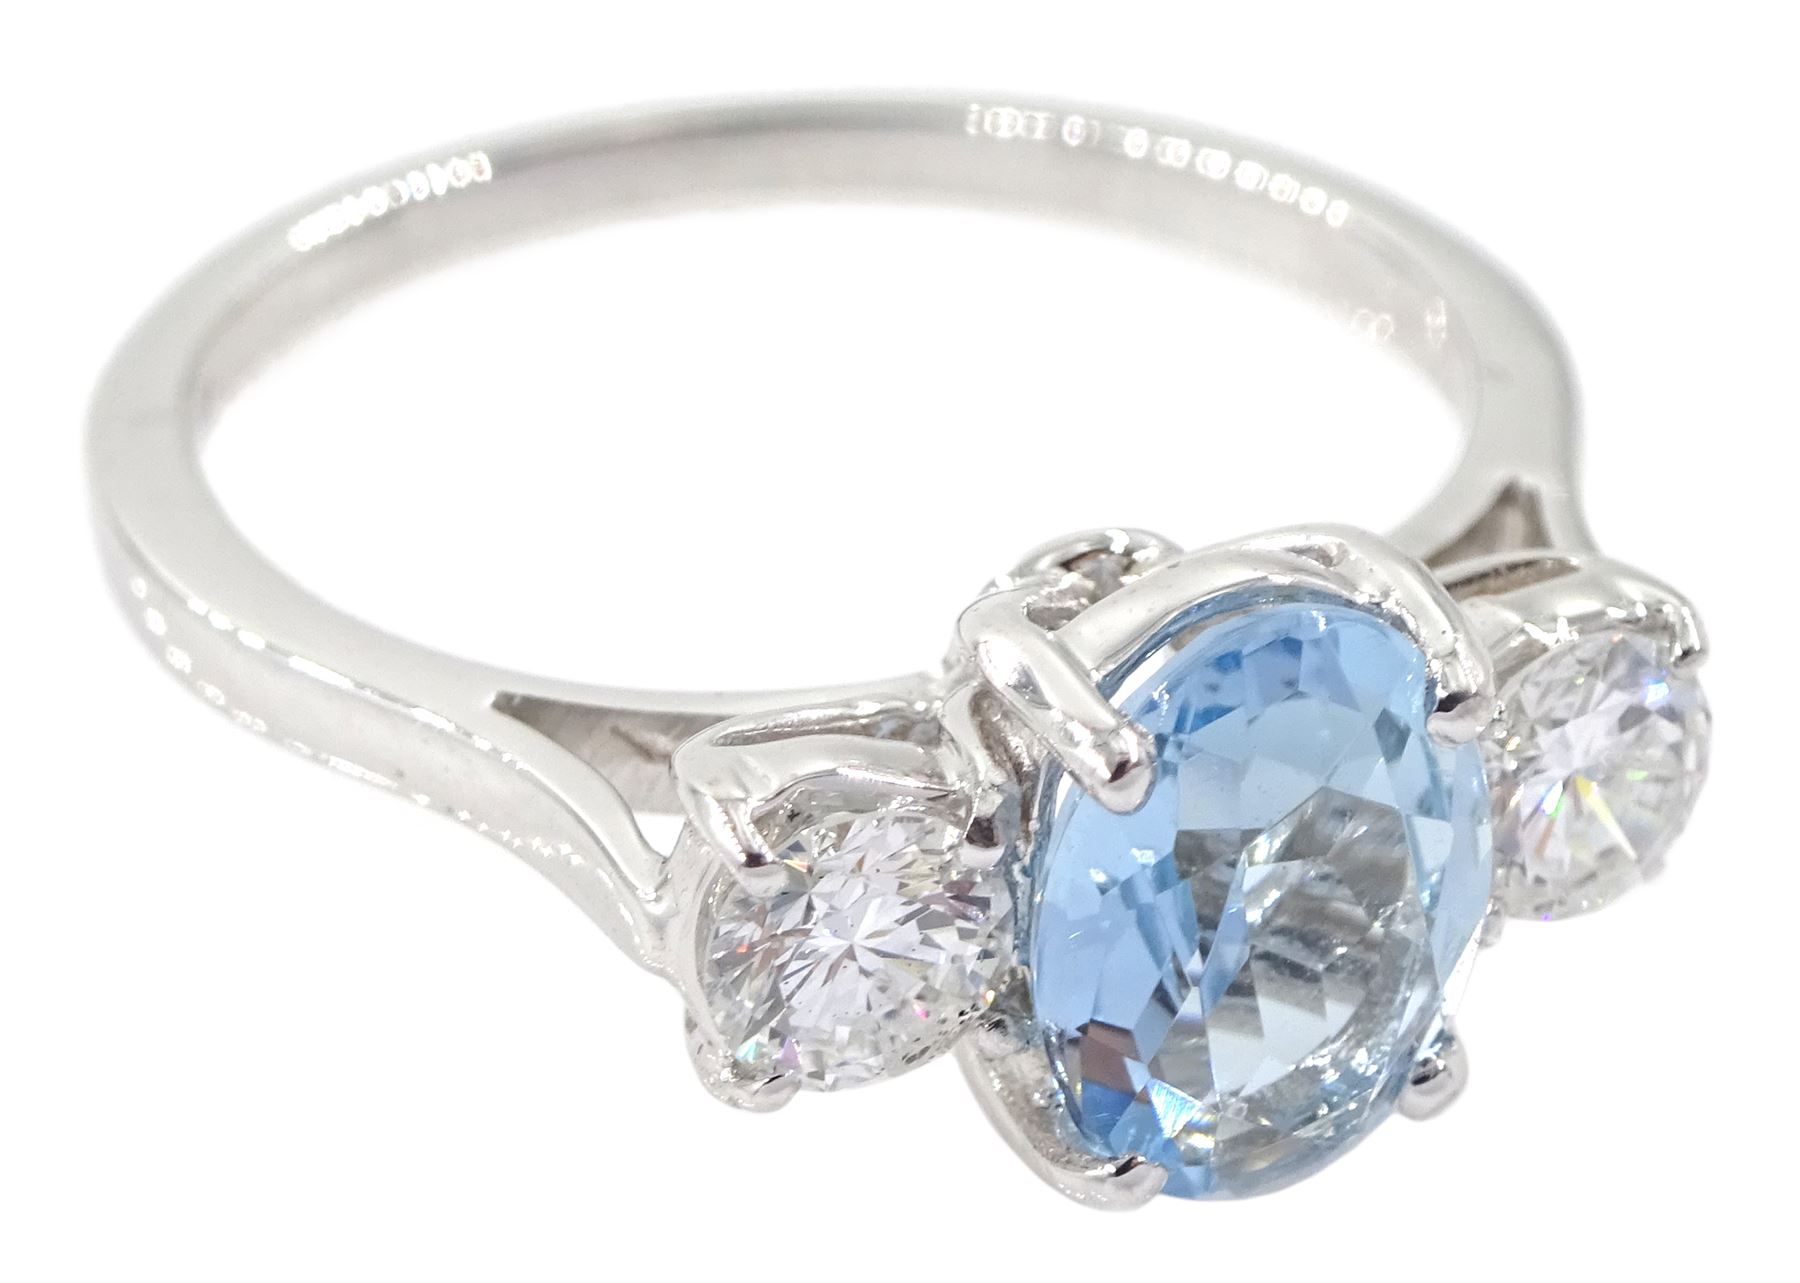 18ct white gold three stone oval aquamarine and round brilliant cut diamond ring - Image 3 of 4